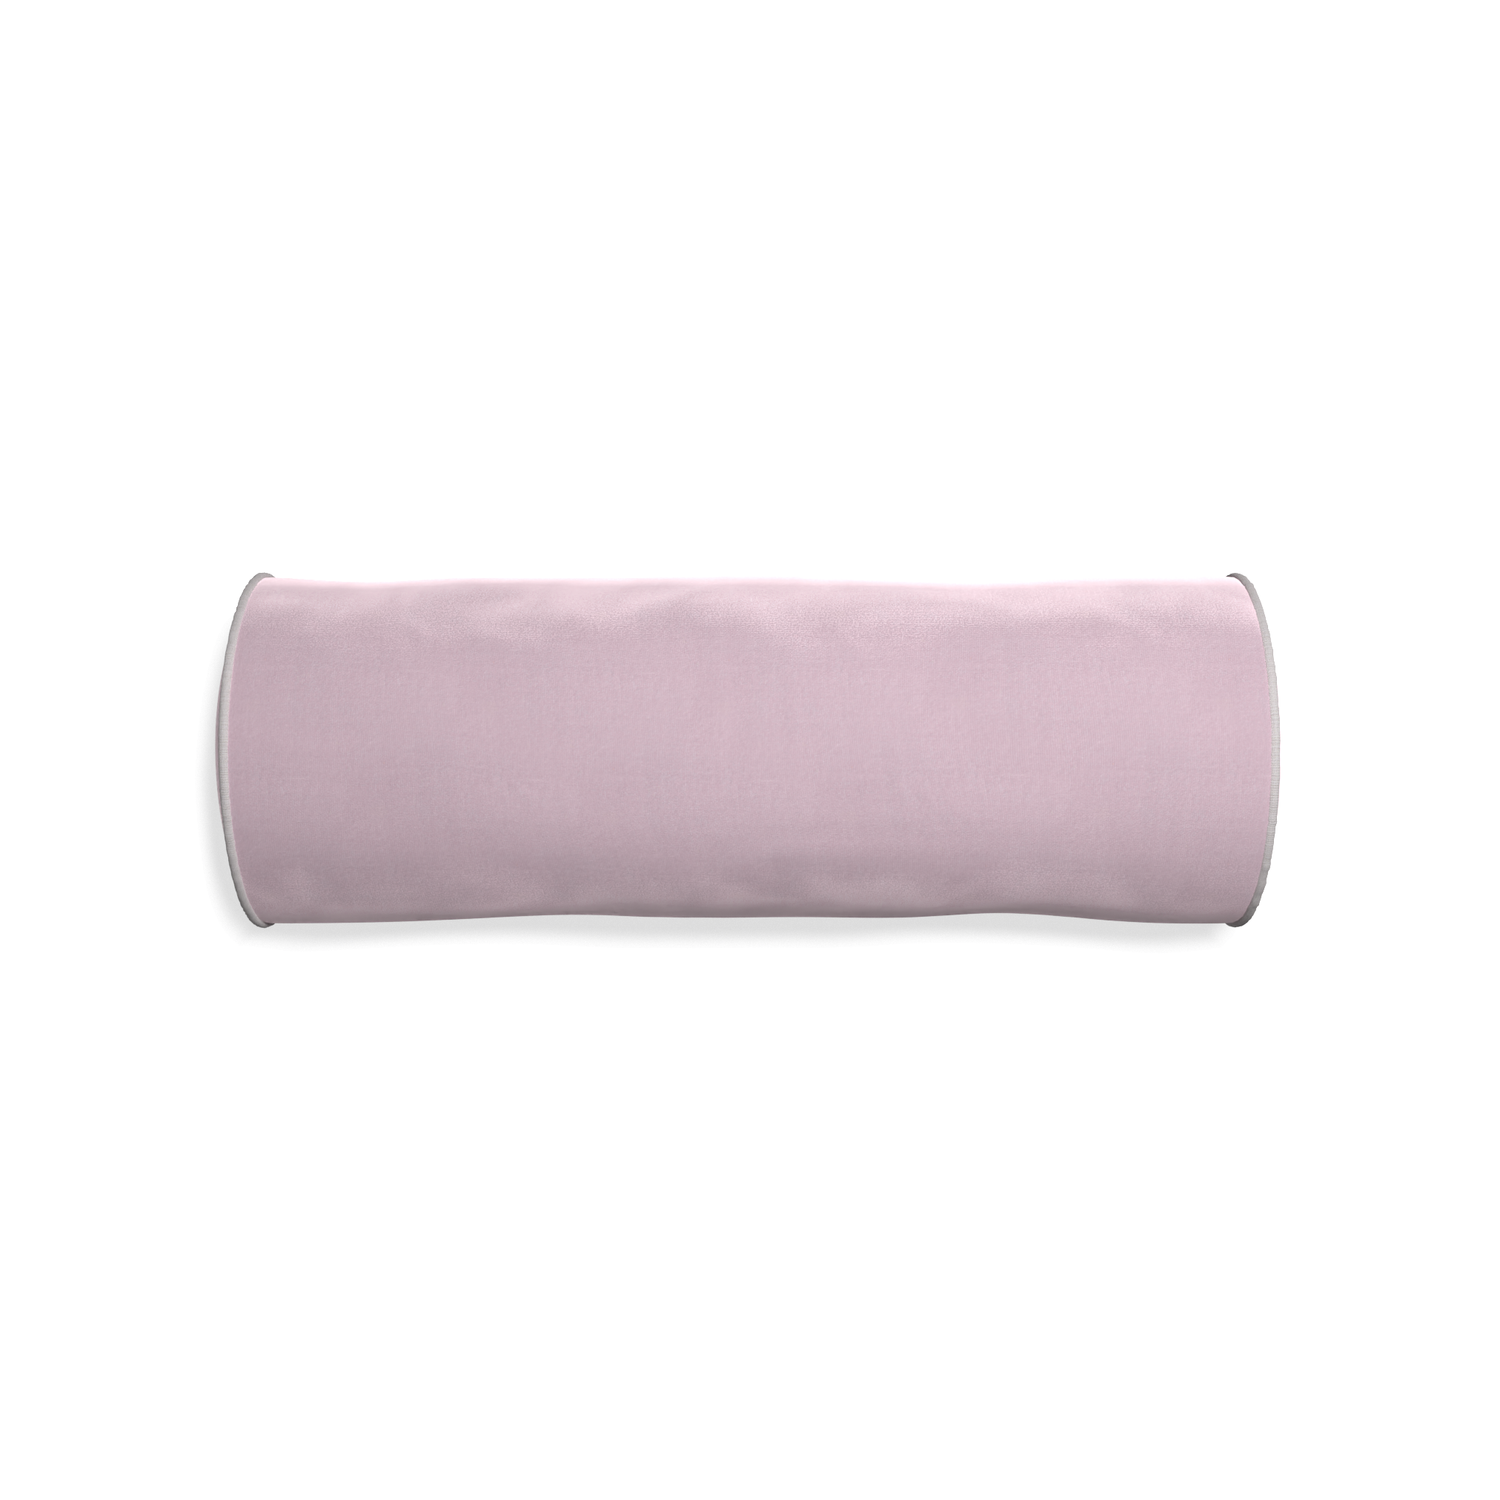 Bolster lilac velvet custom pillow with pebble piping on white background